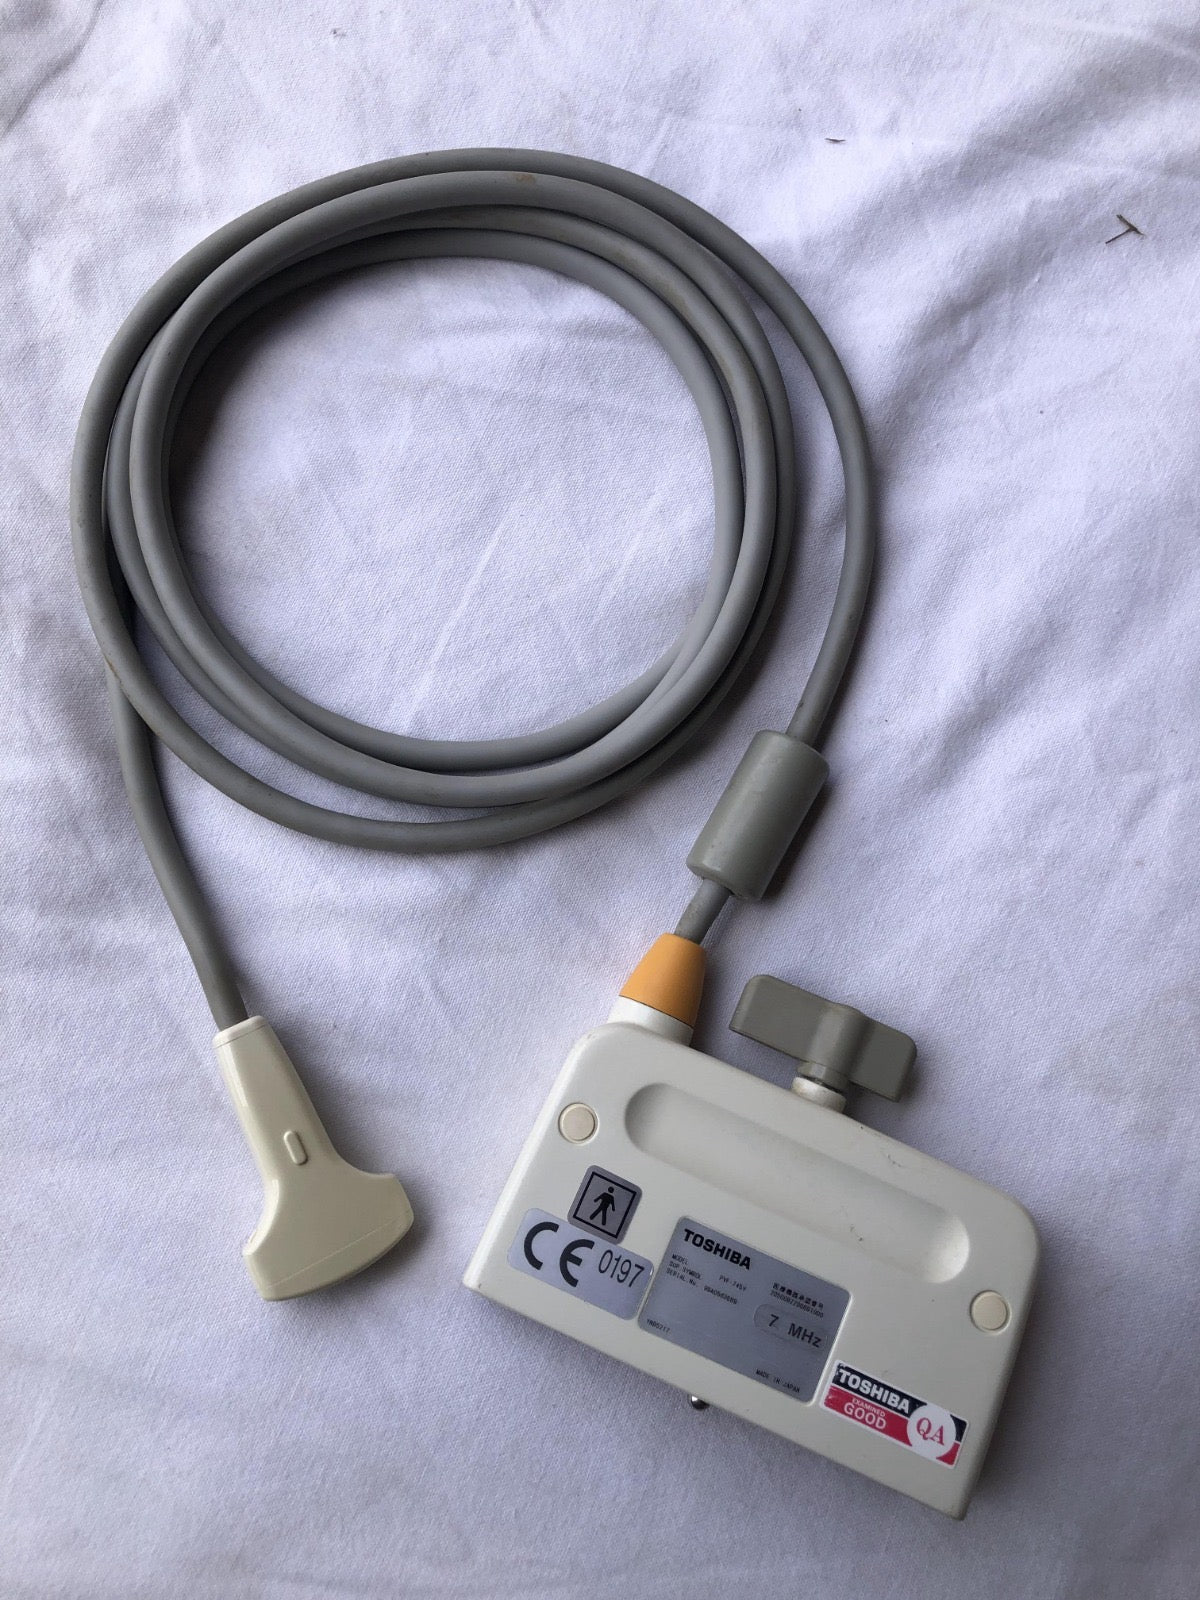 Toshiba PVF-745V micro canvex probe - Japan Medical Company LTD